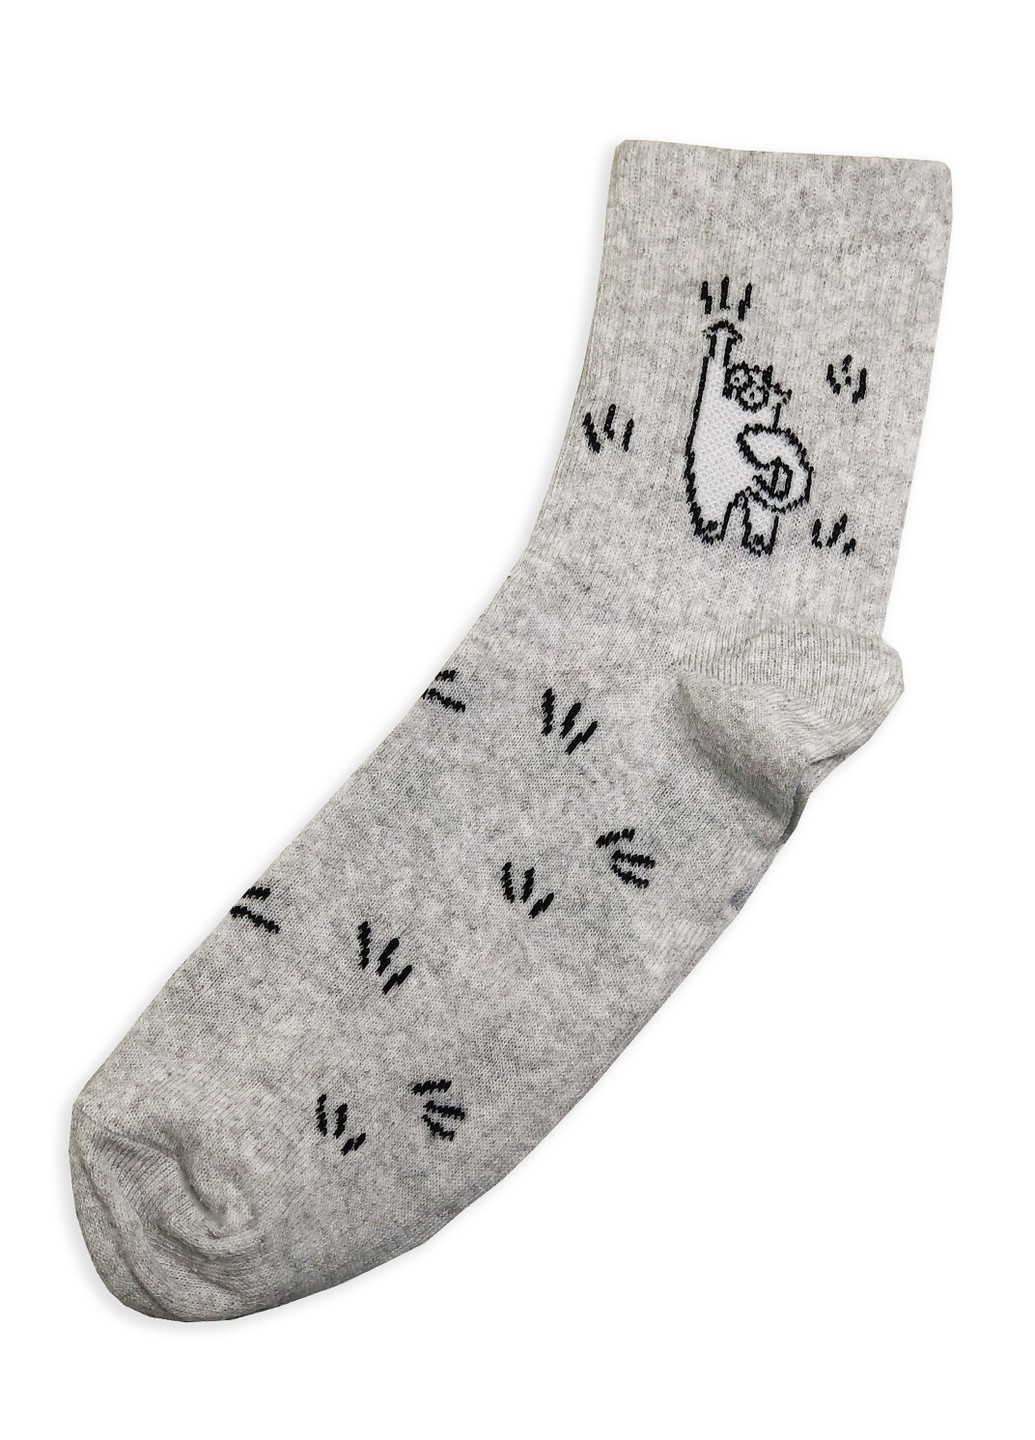 Шкарпетки Кот царапка Rock'n'socks высокие (211258854)